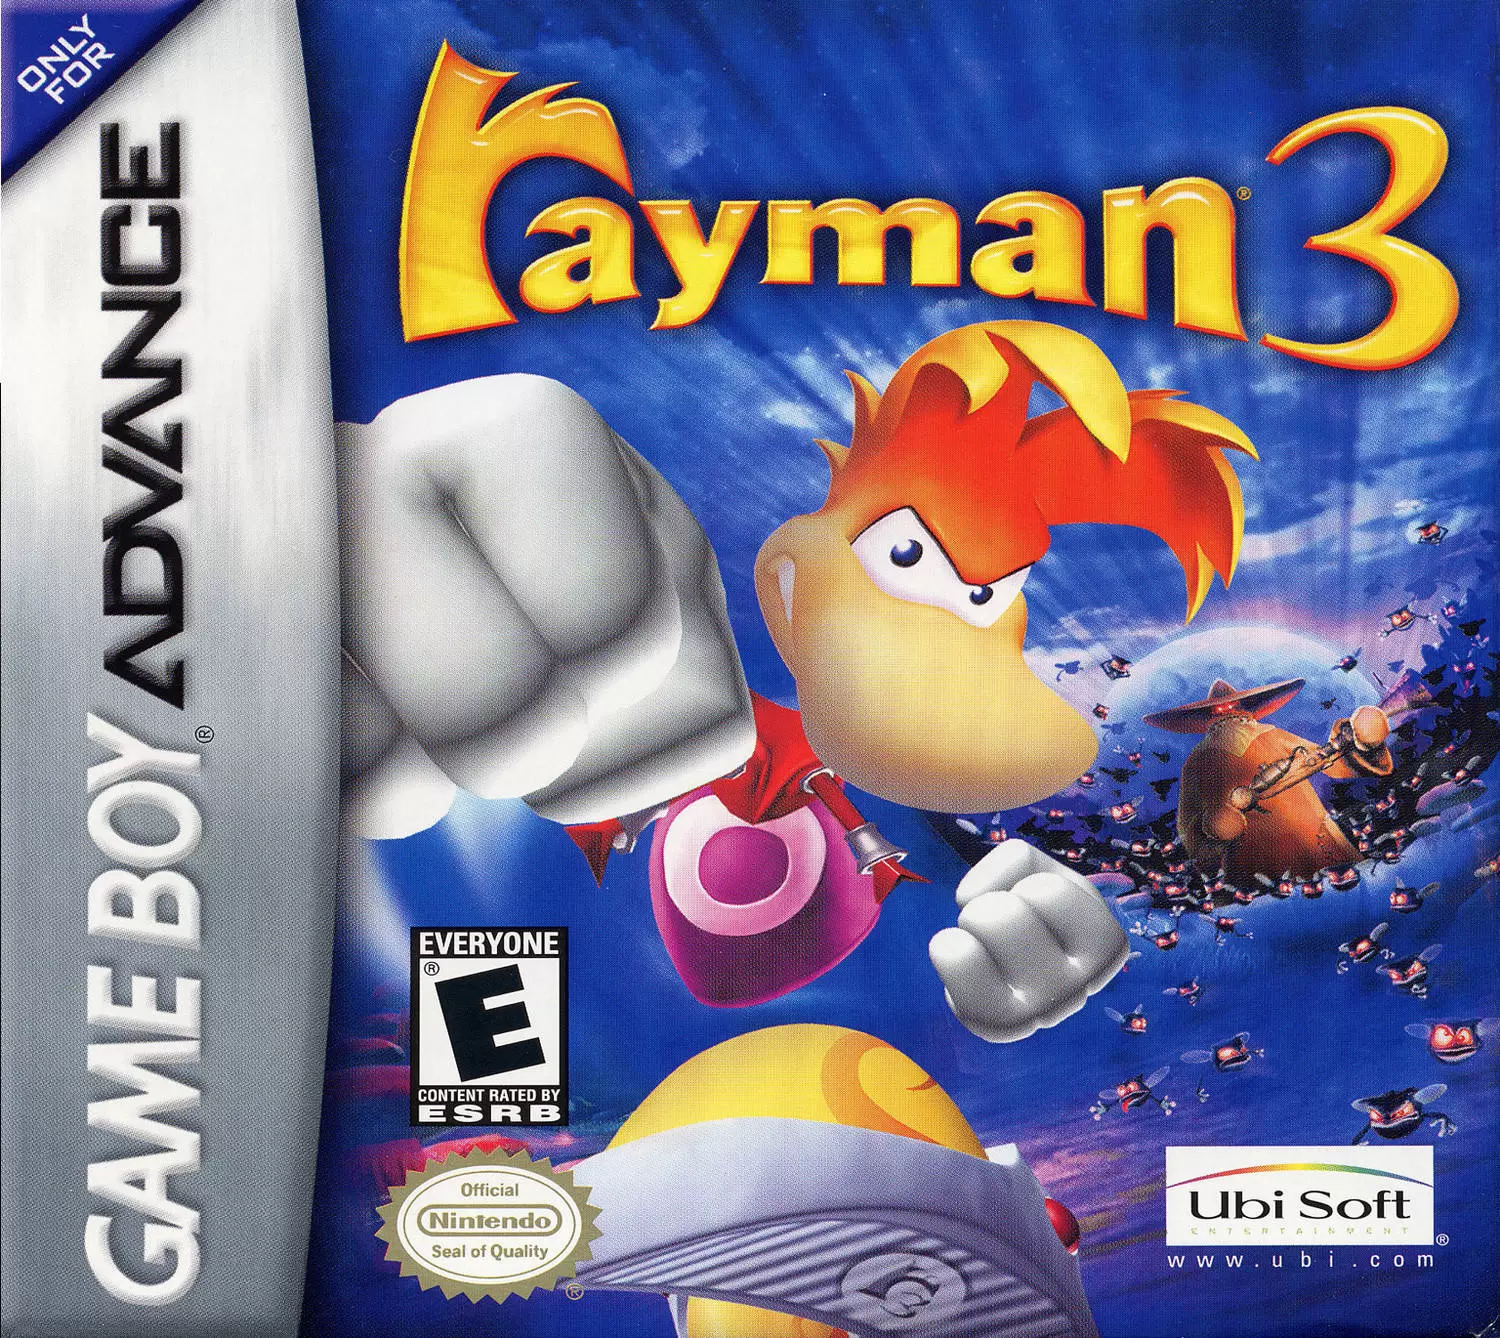 Game Boy Advance Games - Rayman 3